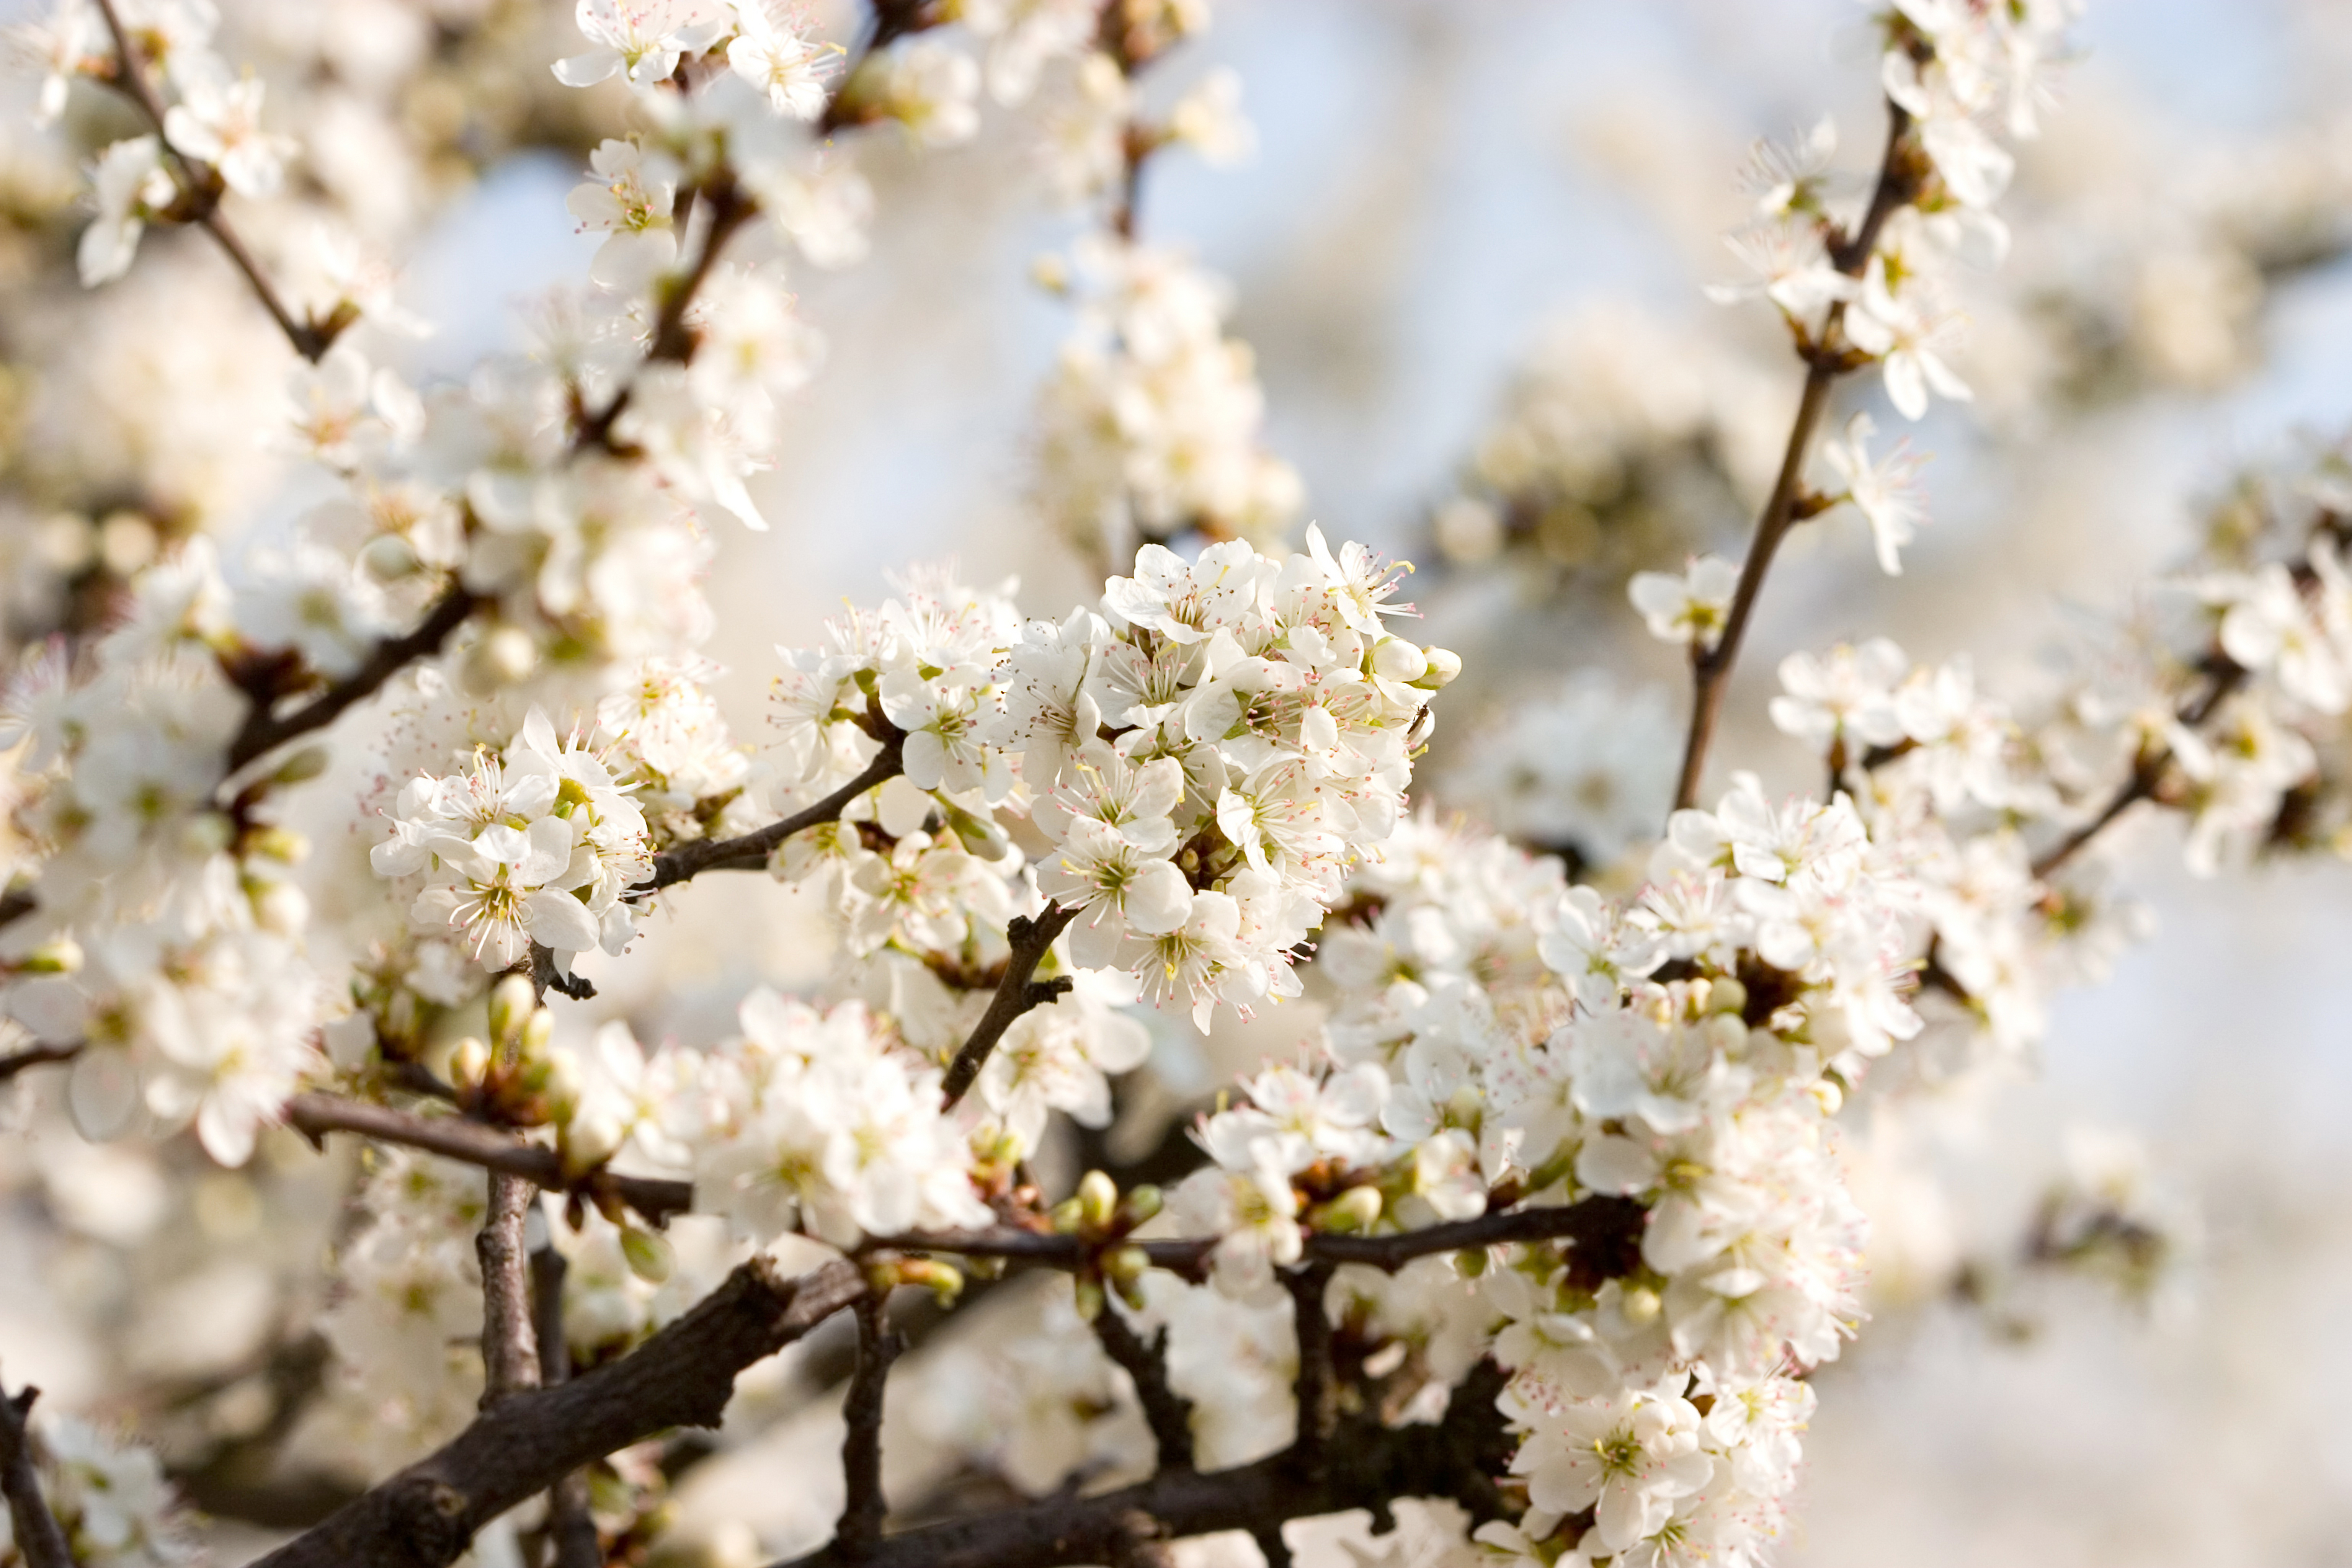 Фото весны красивые на заставку на телефон. Цветущая белая вишня дерево. Вишня дерево цветение. Вишня обыкновенная цветение. Цветущая Весенняя вишня.